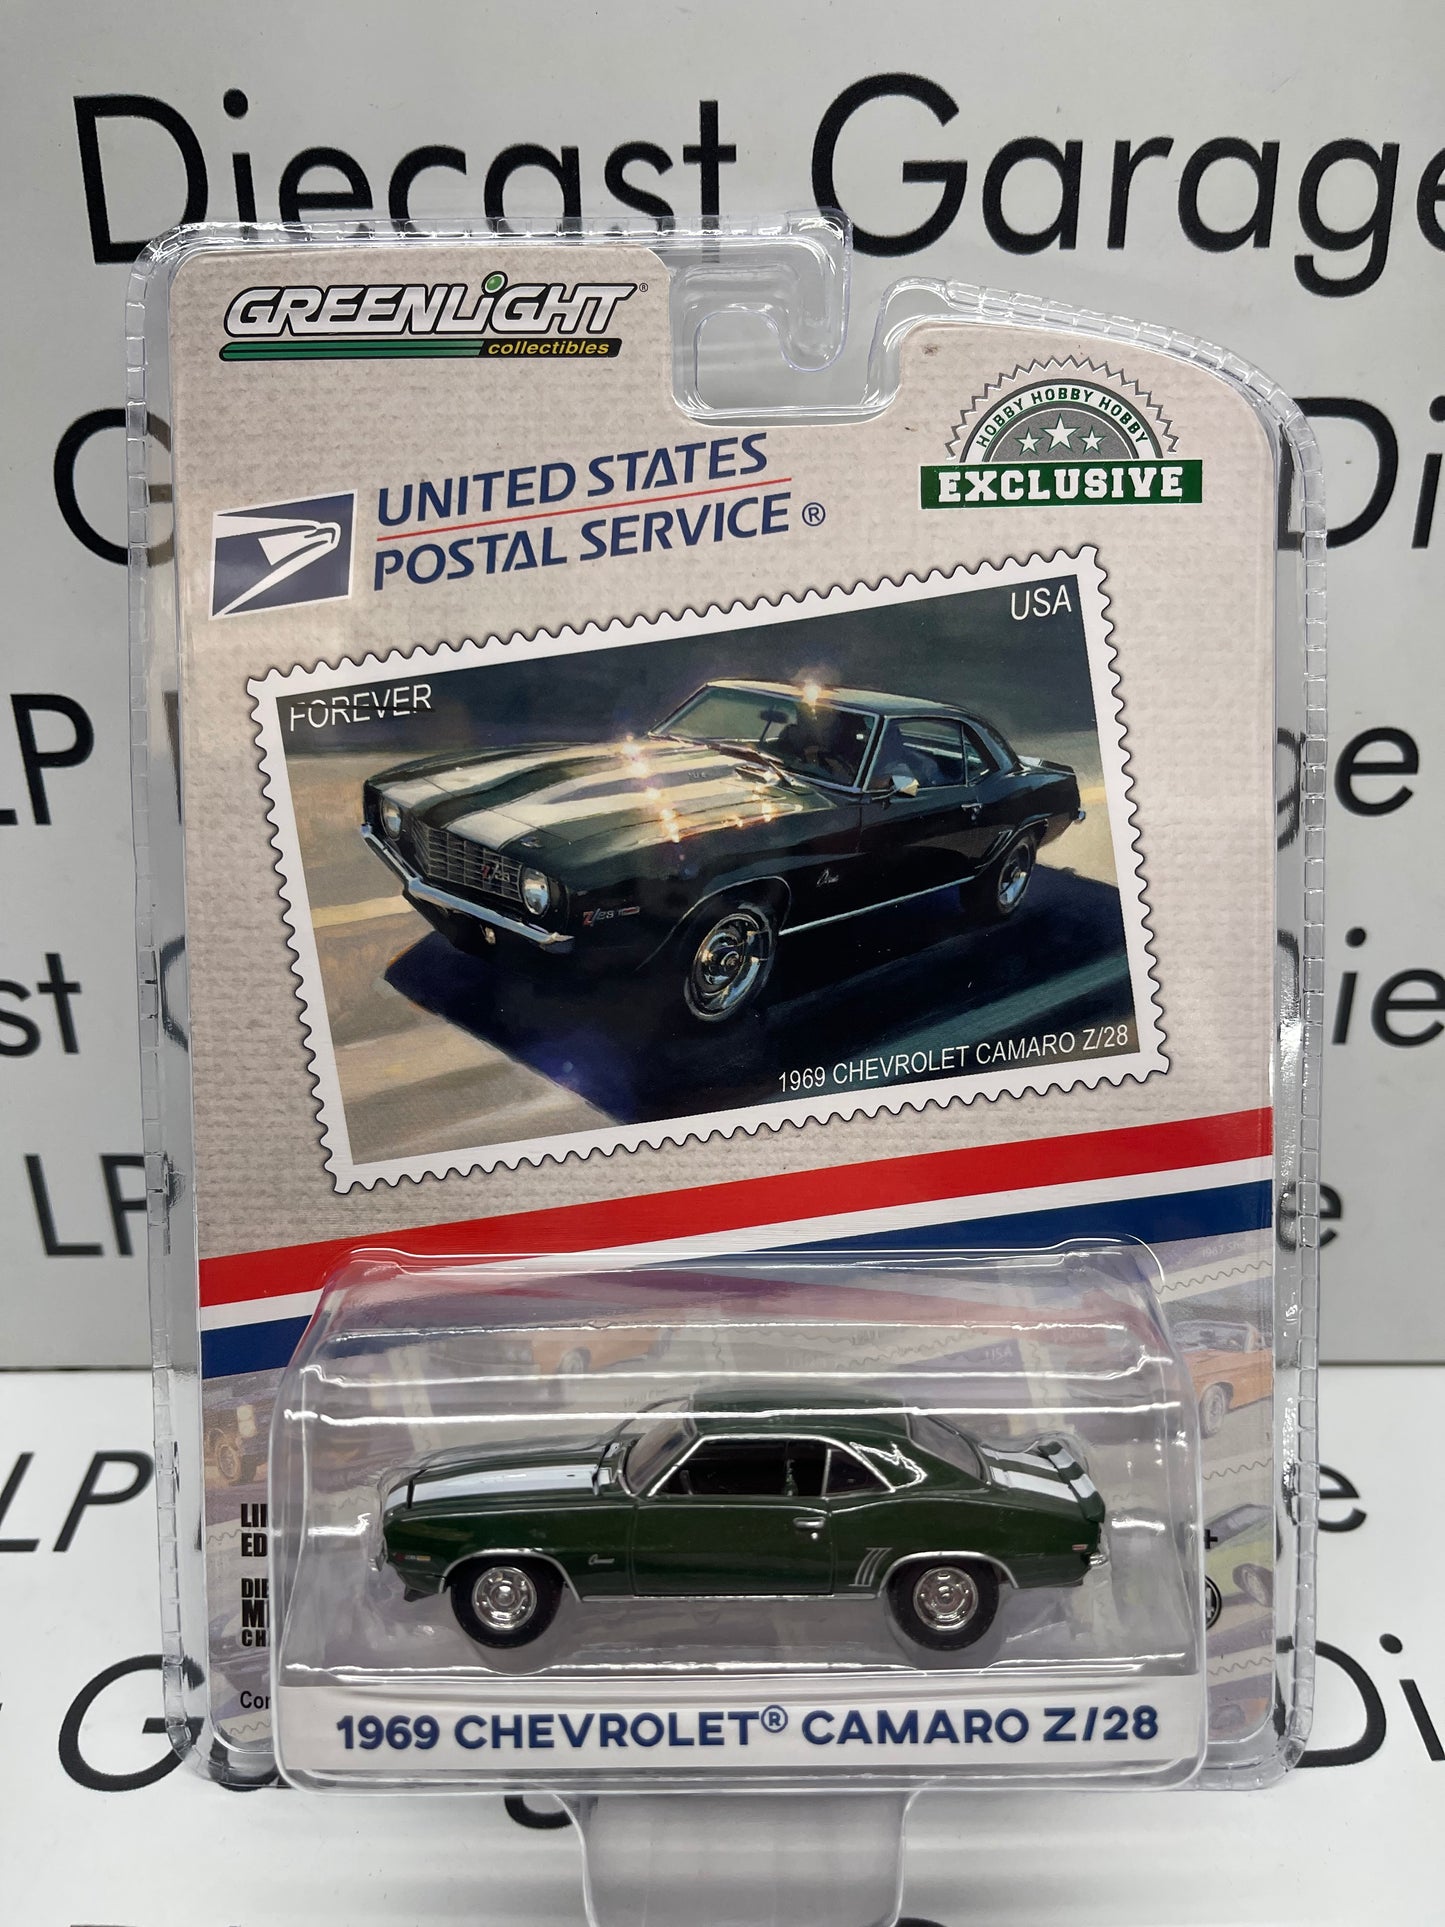 GREENLIGHT 1969 Chevrolet Camaro Z28 Green with White Stripes United States Postal Service 1:64 Diecast